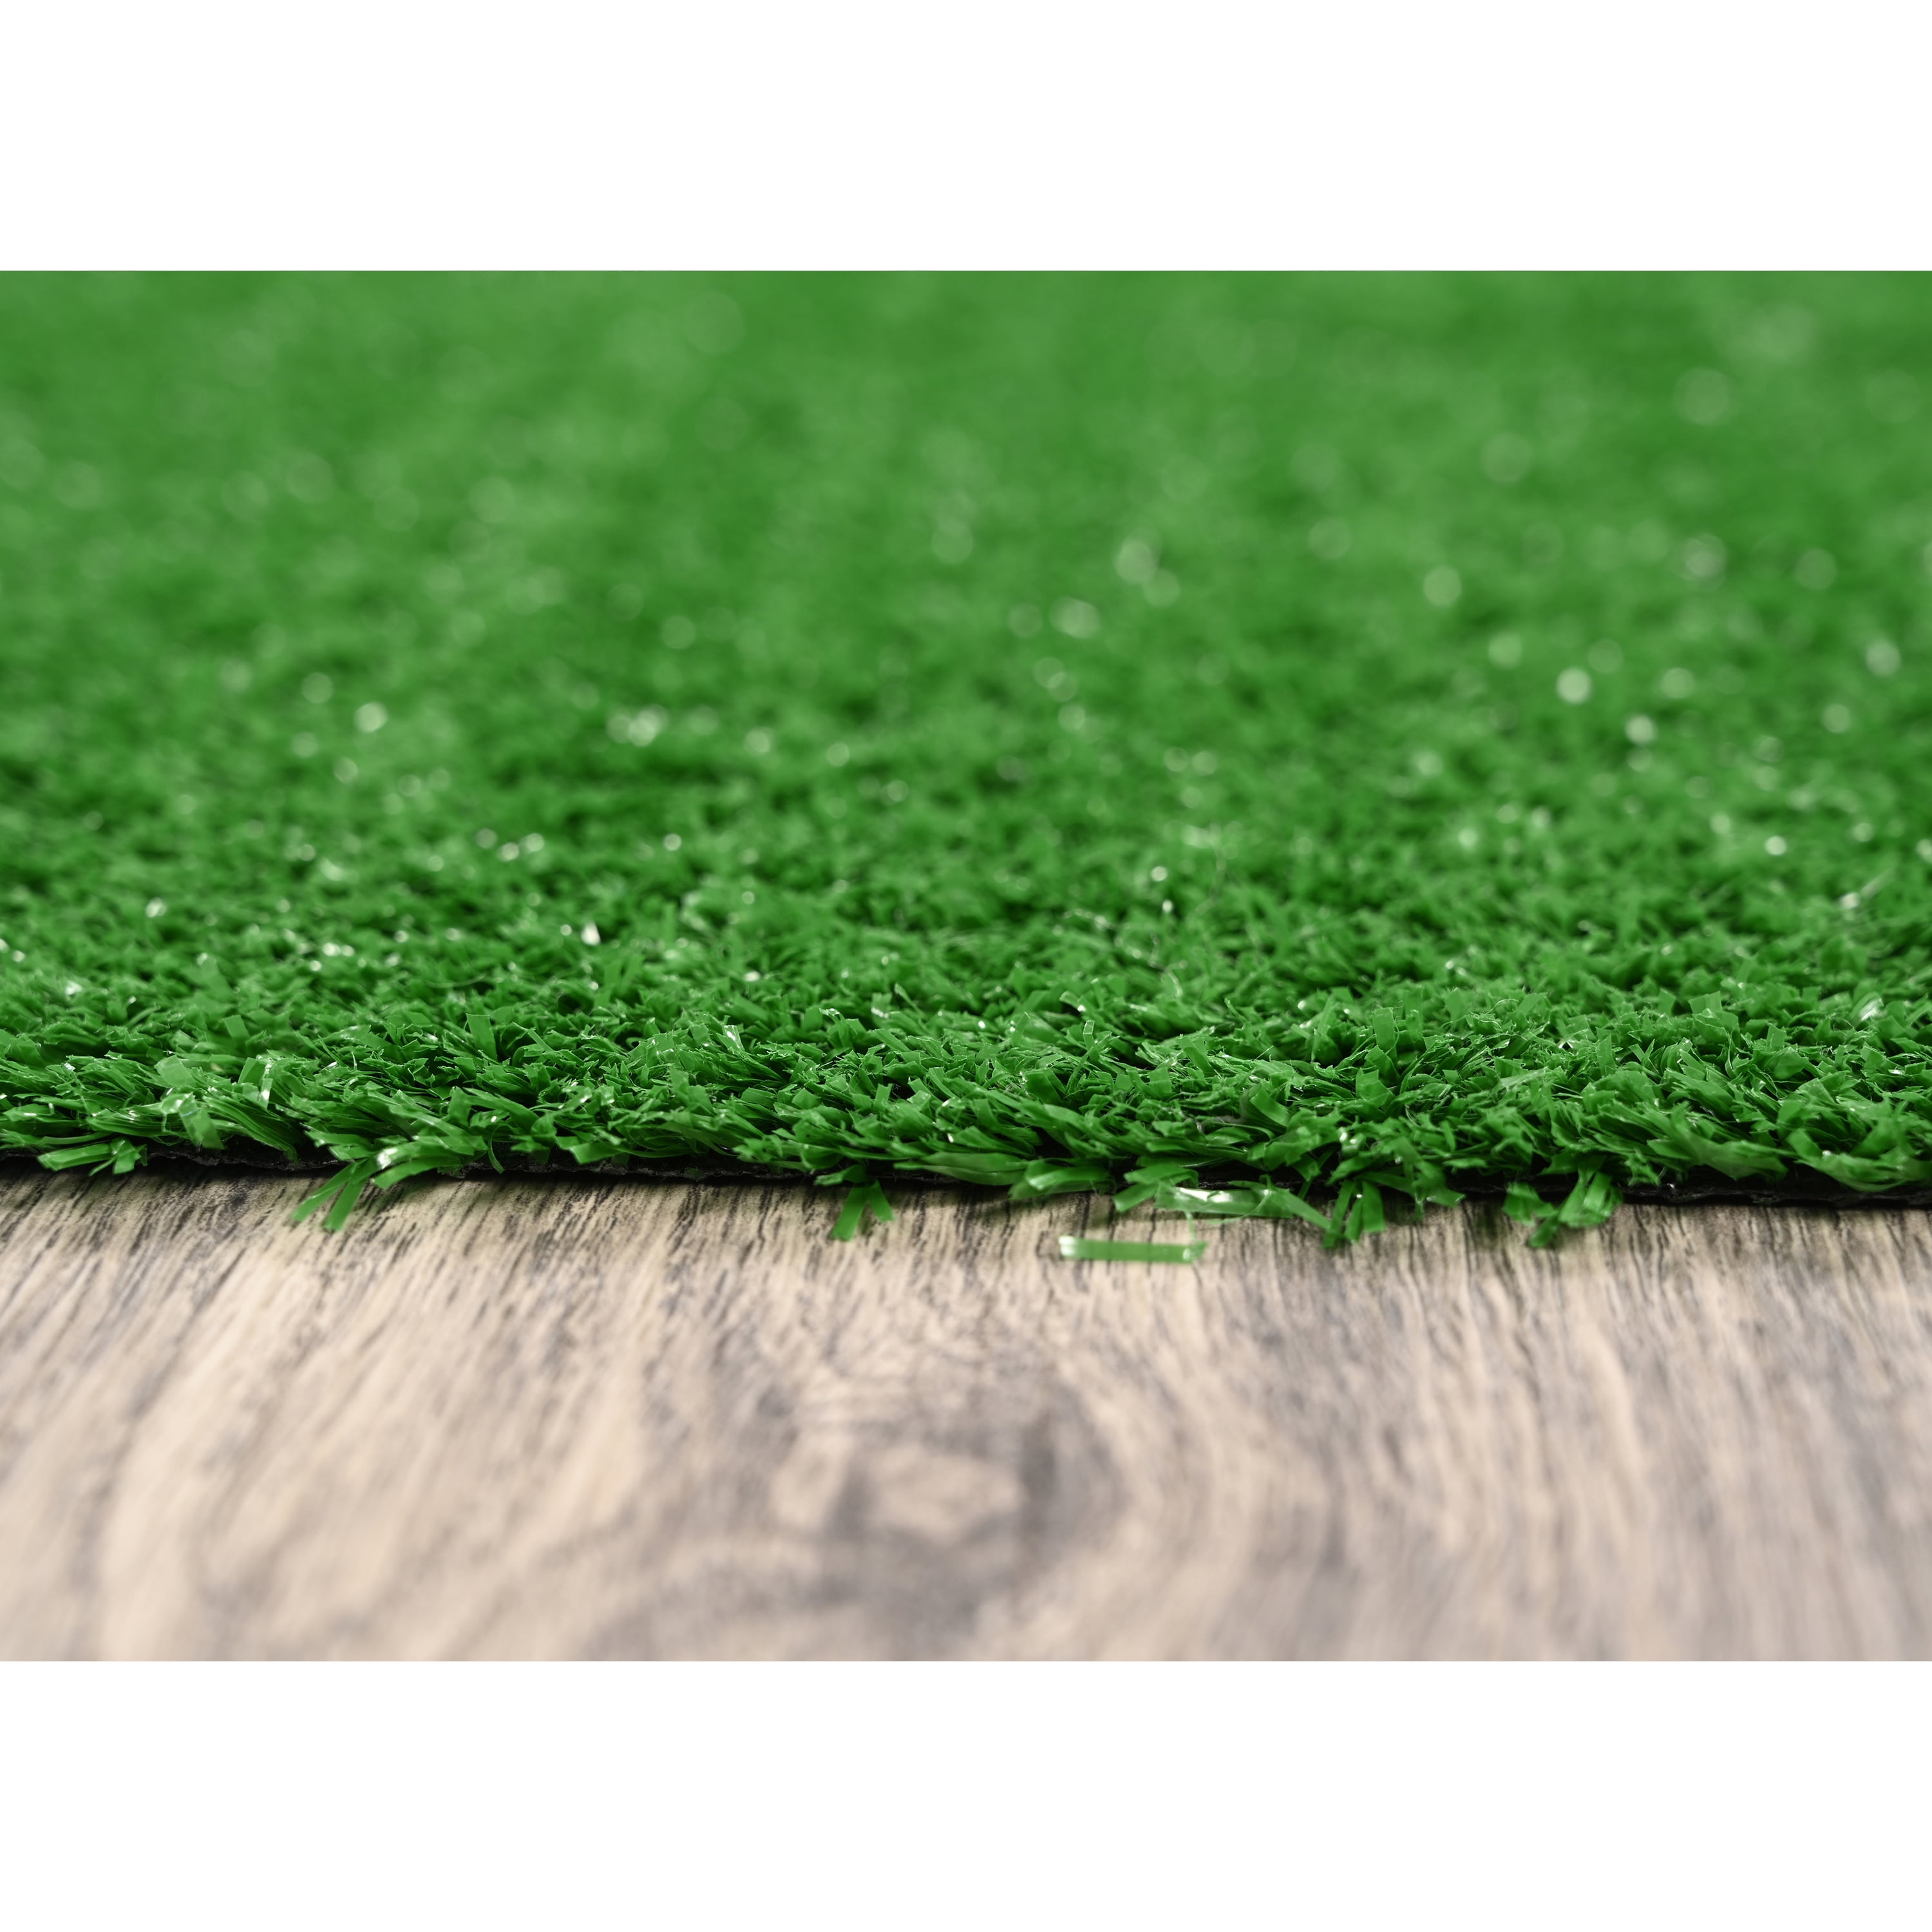 Nance Carpet and Rug Prairie Sample 12 ft. Wide x Cut to Length Green Artificial Grass